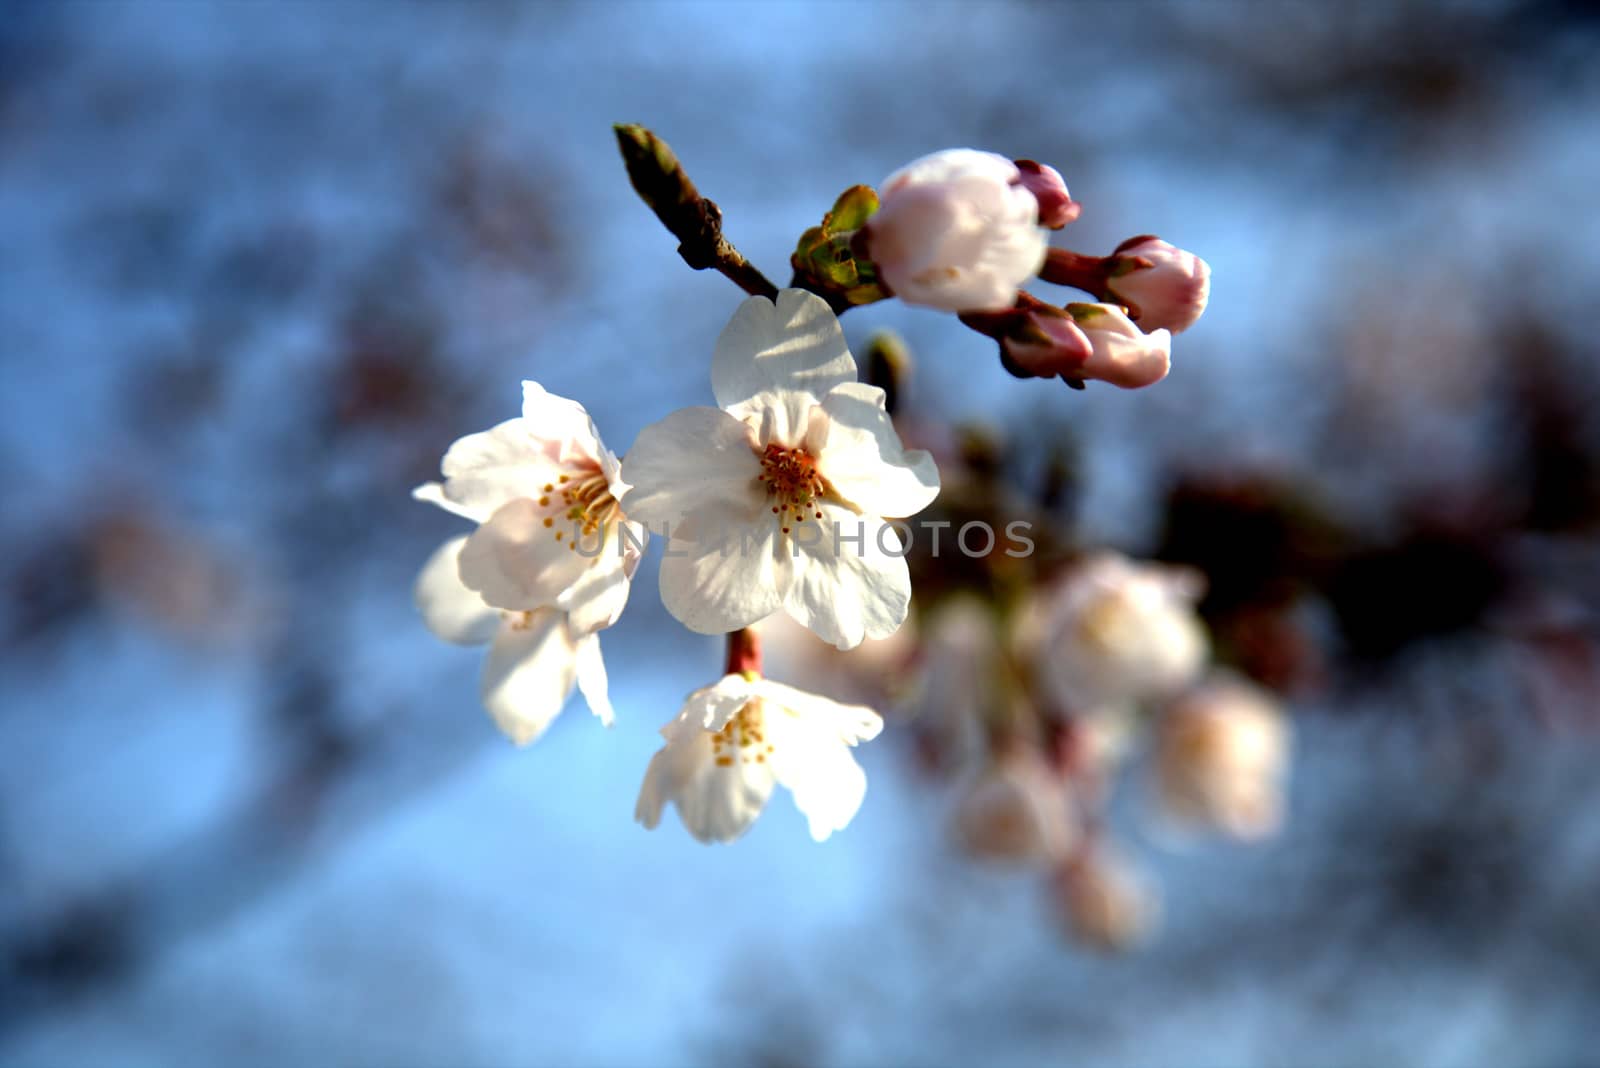 Sakura in Bloom by hanstography